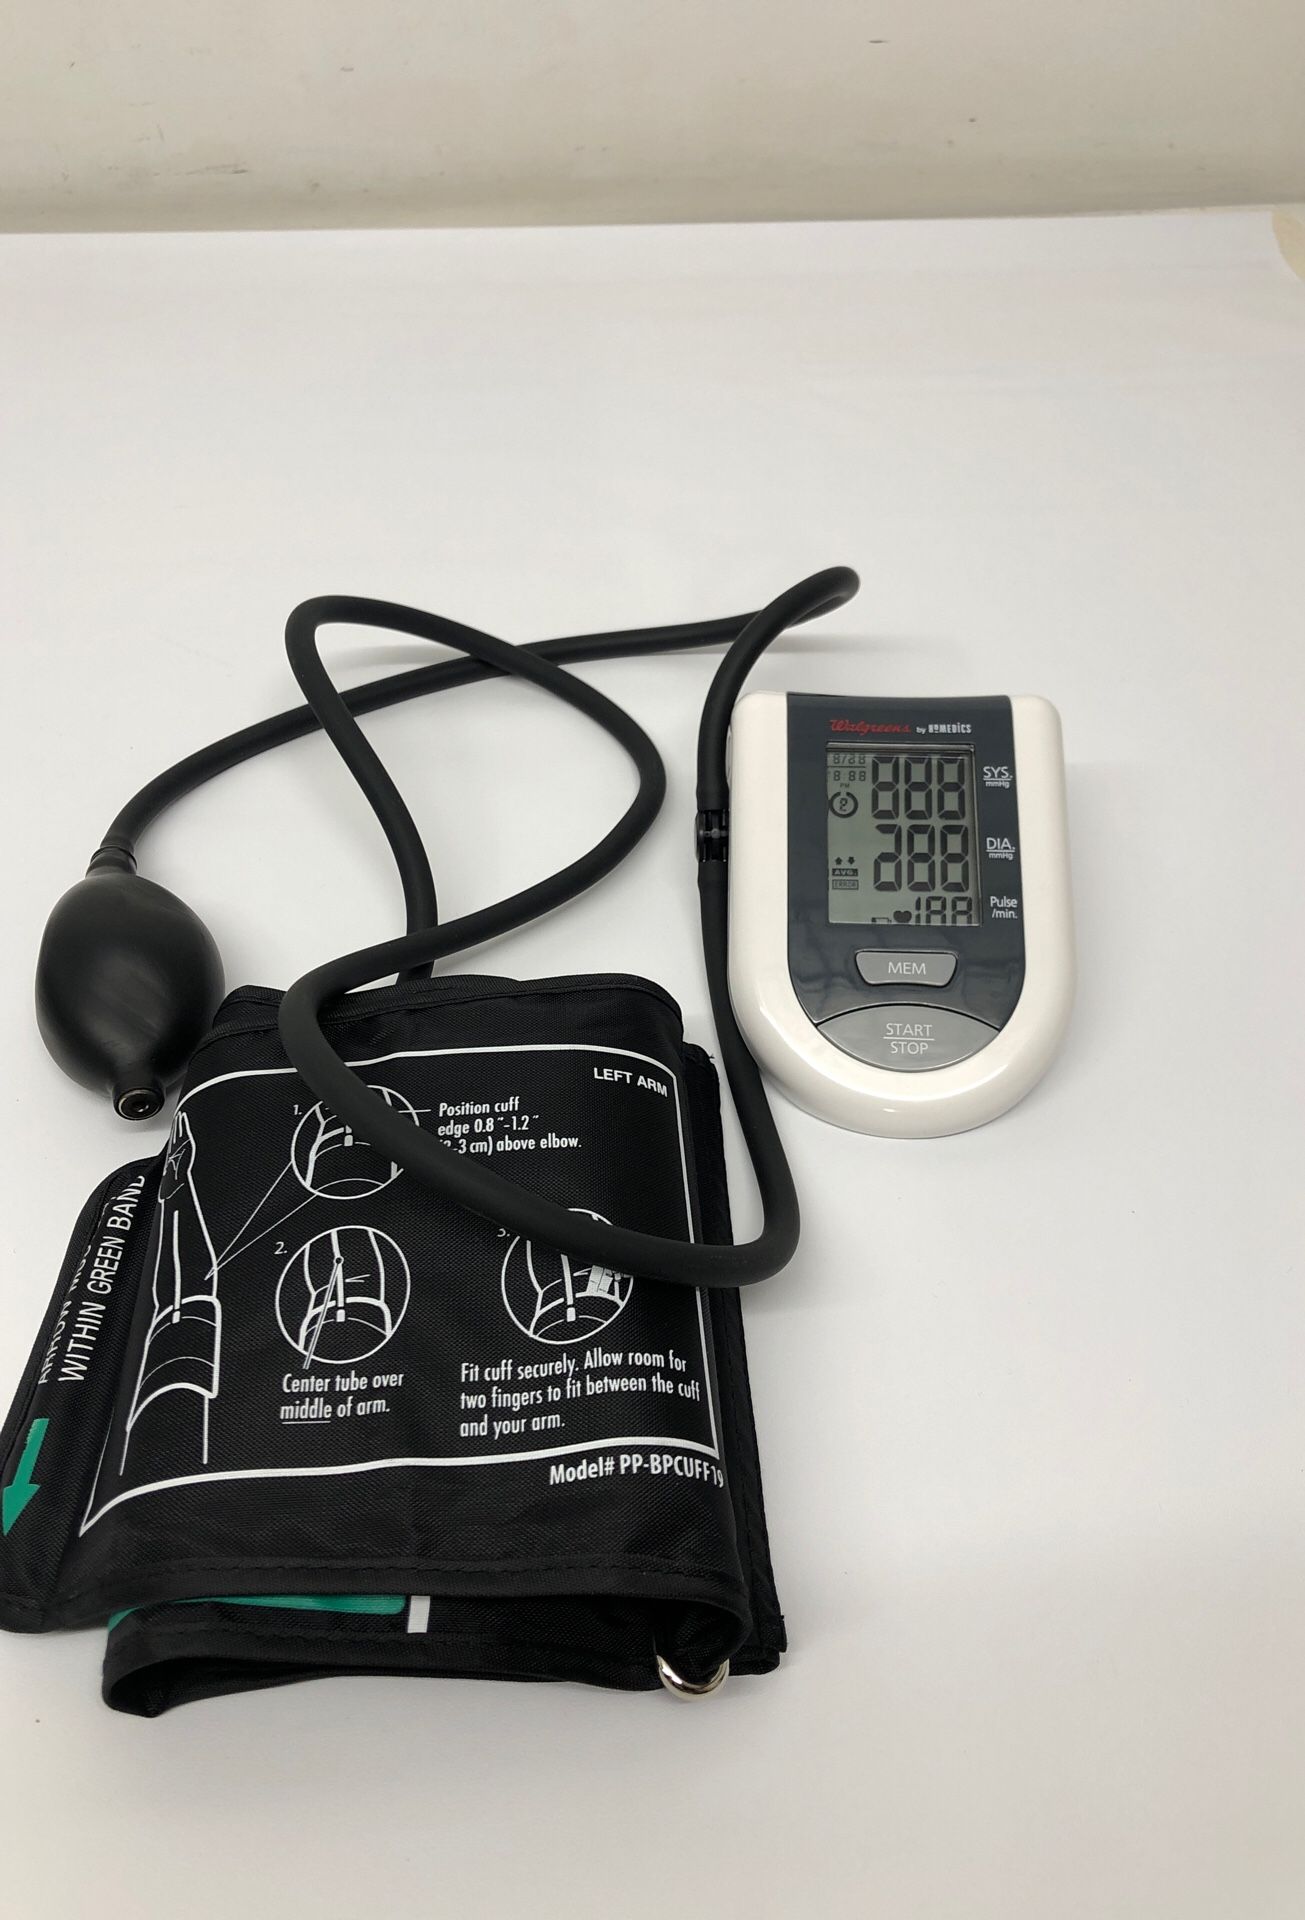 1 New QardioArm Wireless Blood Pressure Monitor - Arctic White Color for  Sale in Baltimore, MD - OfferUp